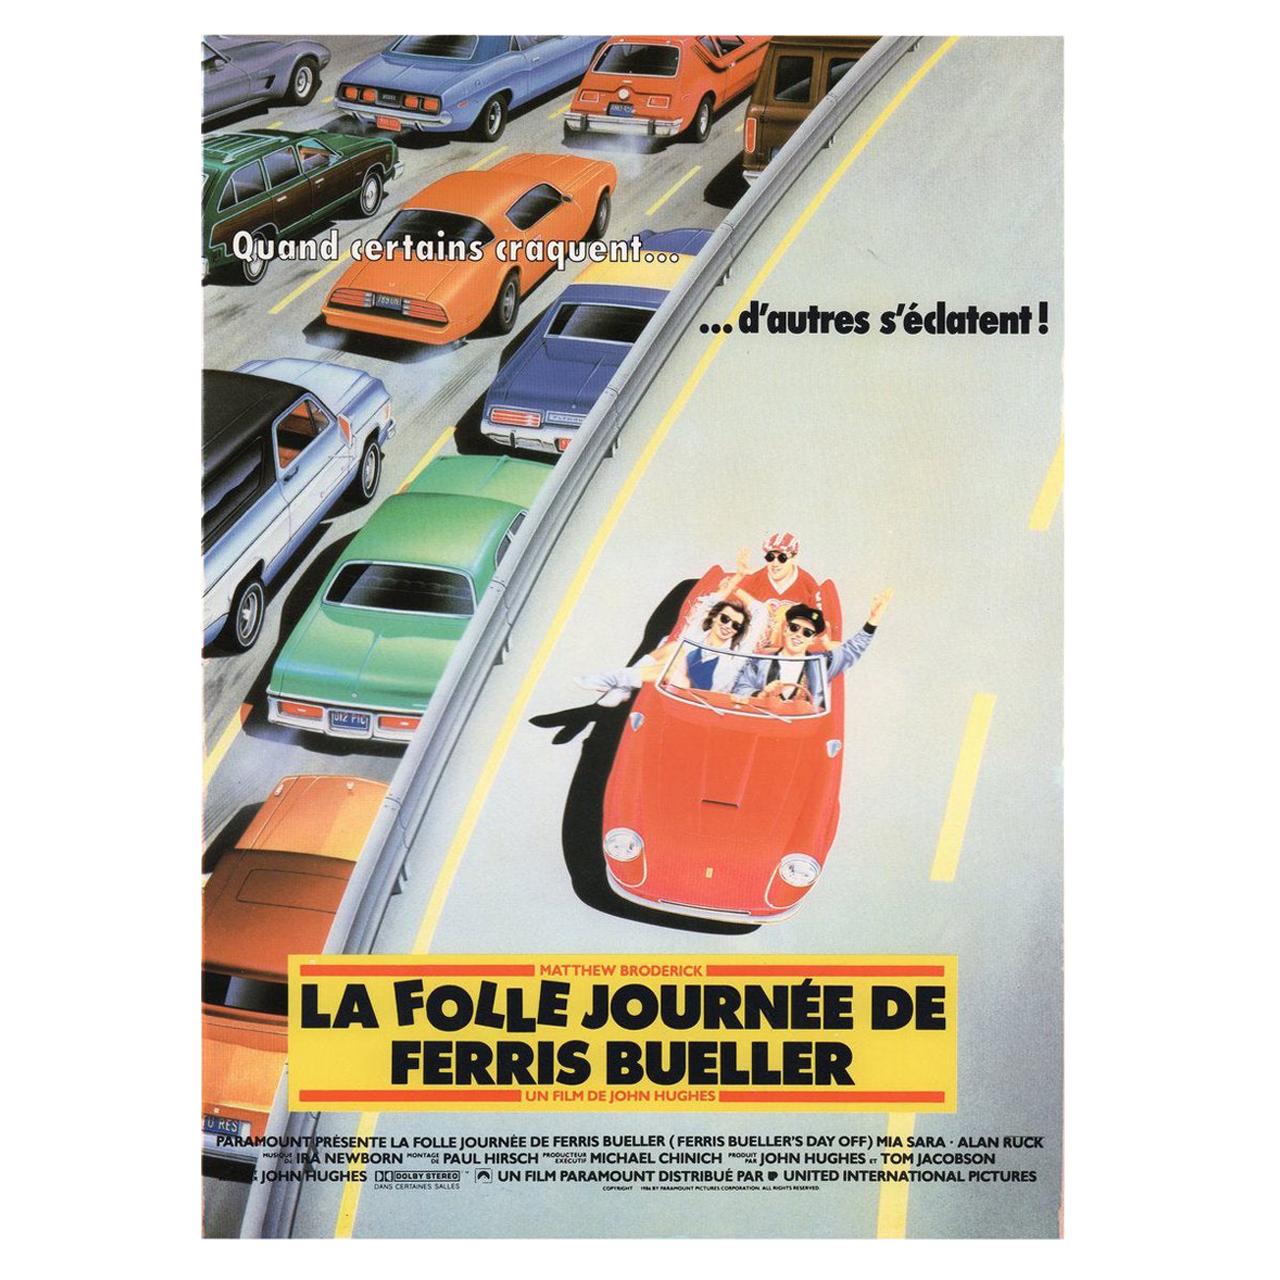 Ferris Bueller's Day Off 1986 French Press Sheet